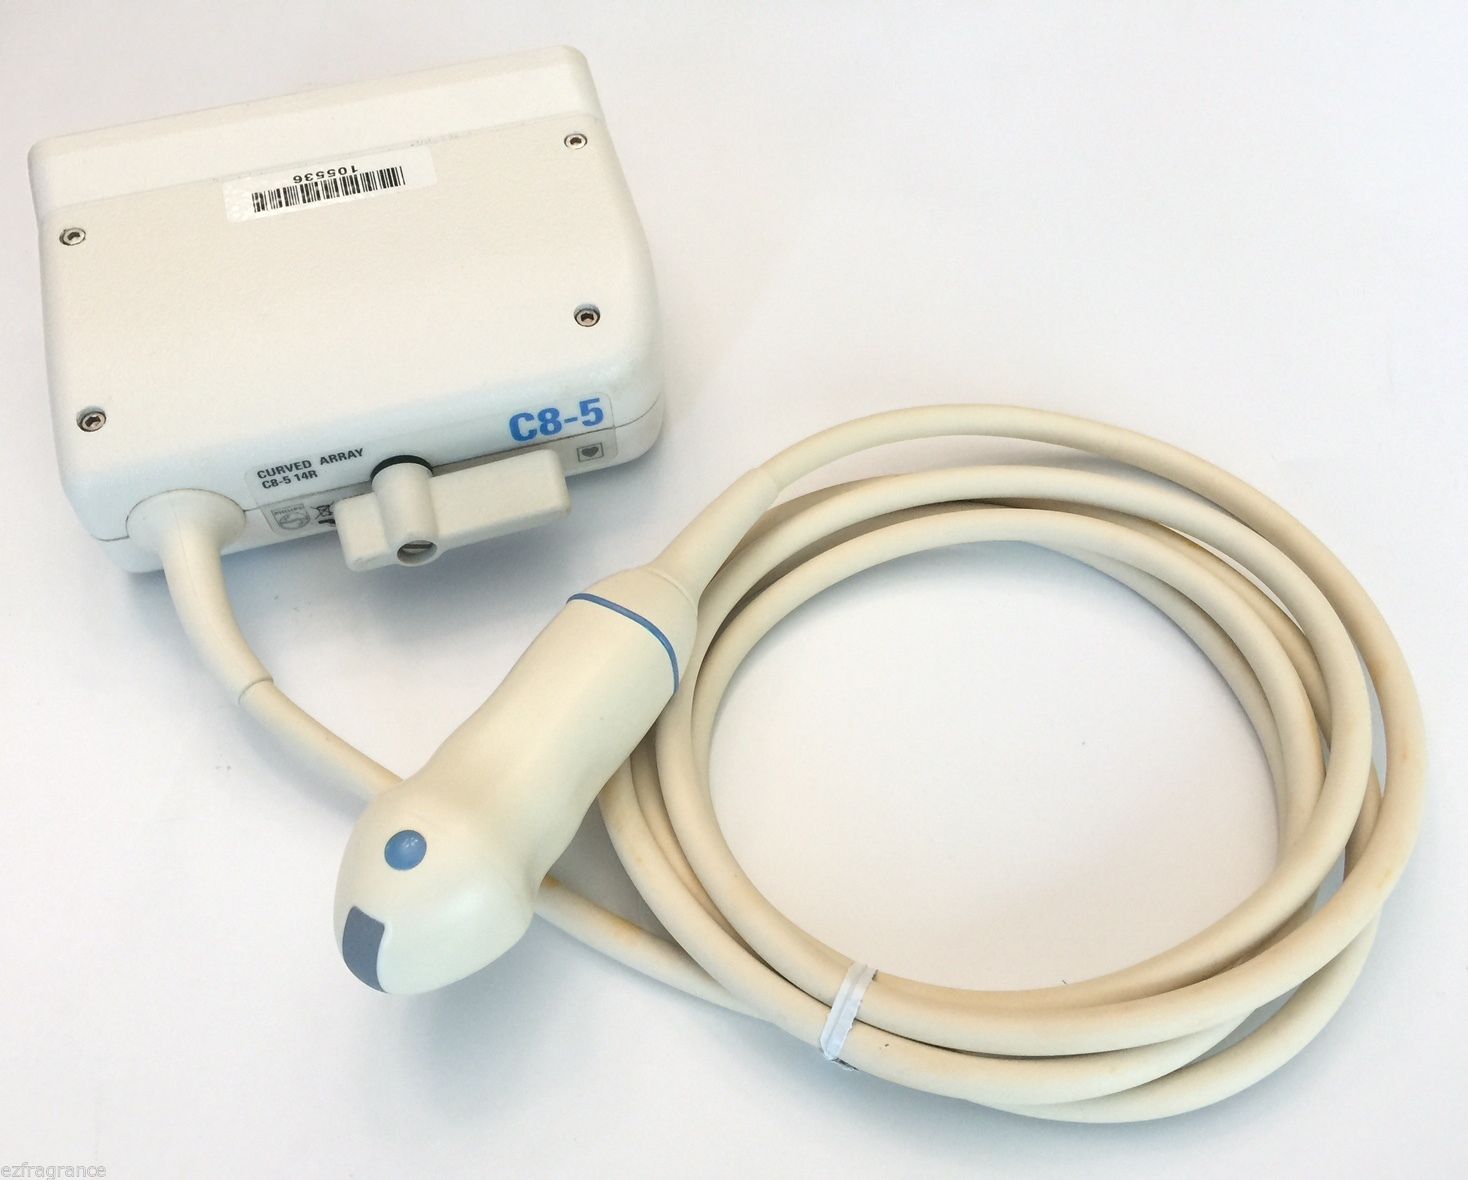 Philips ATL C8-5 14R Broadband Curved Array Transducer Ultrasound Probe.USED